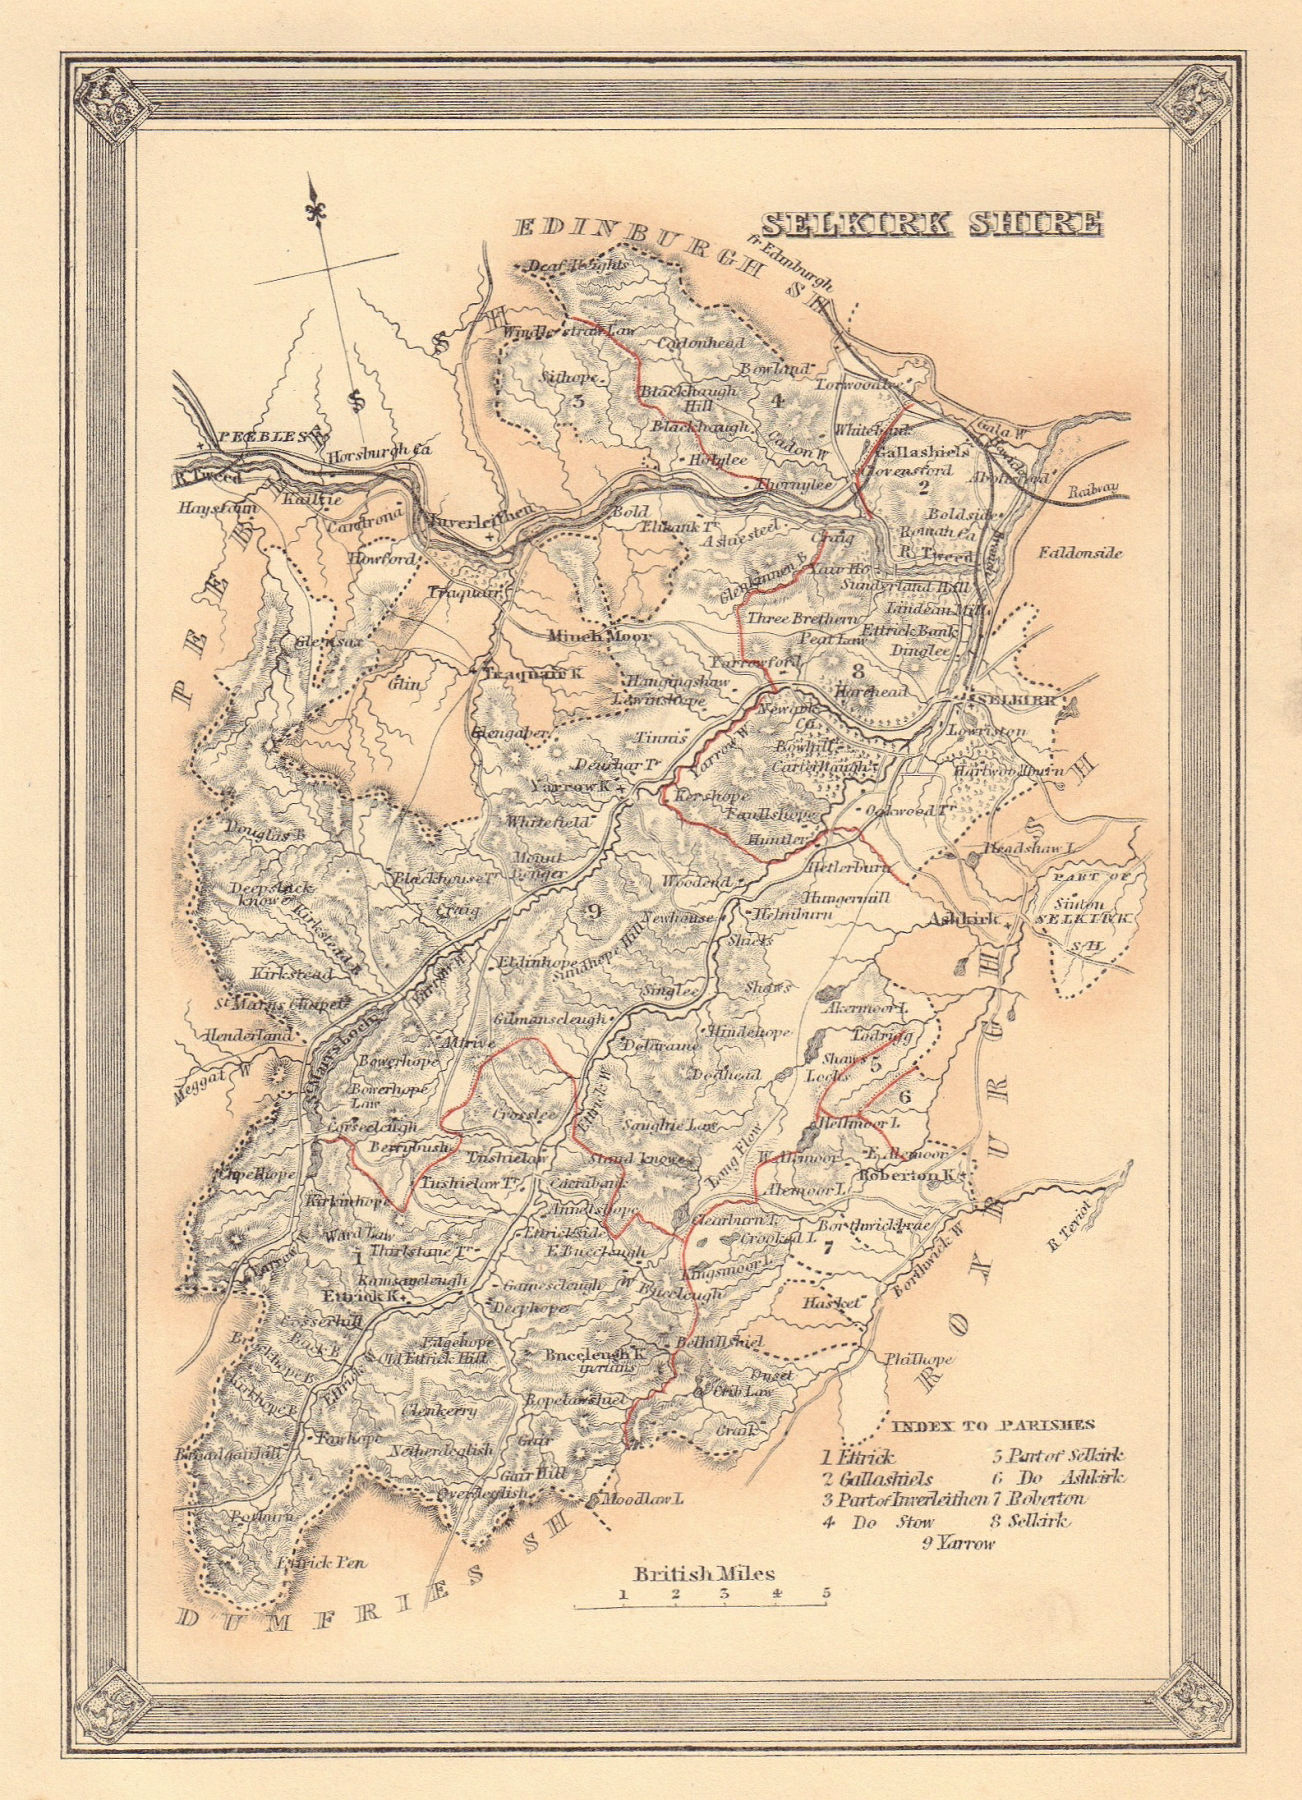 Associate Product Decorative antique county map of Selkirkshire, Scotland. FULLARTON 1866